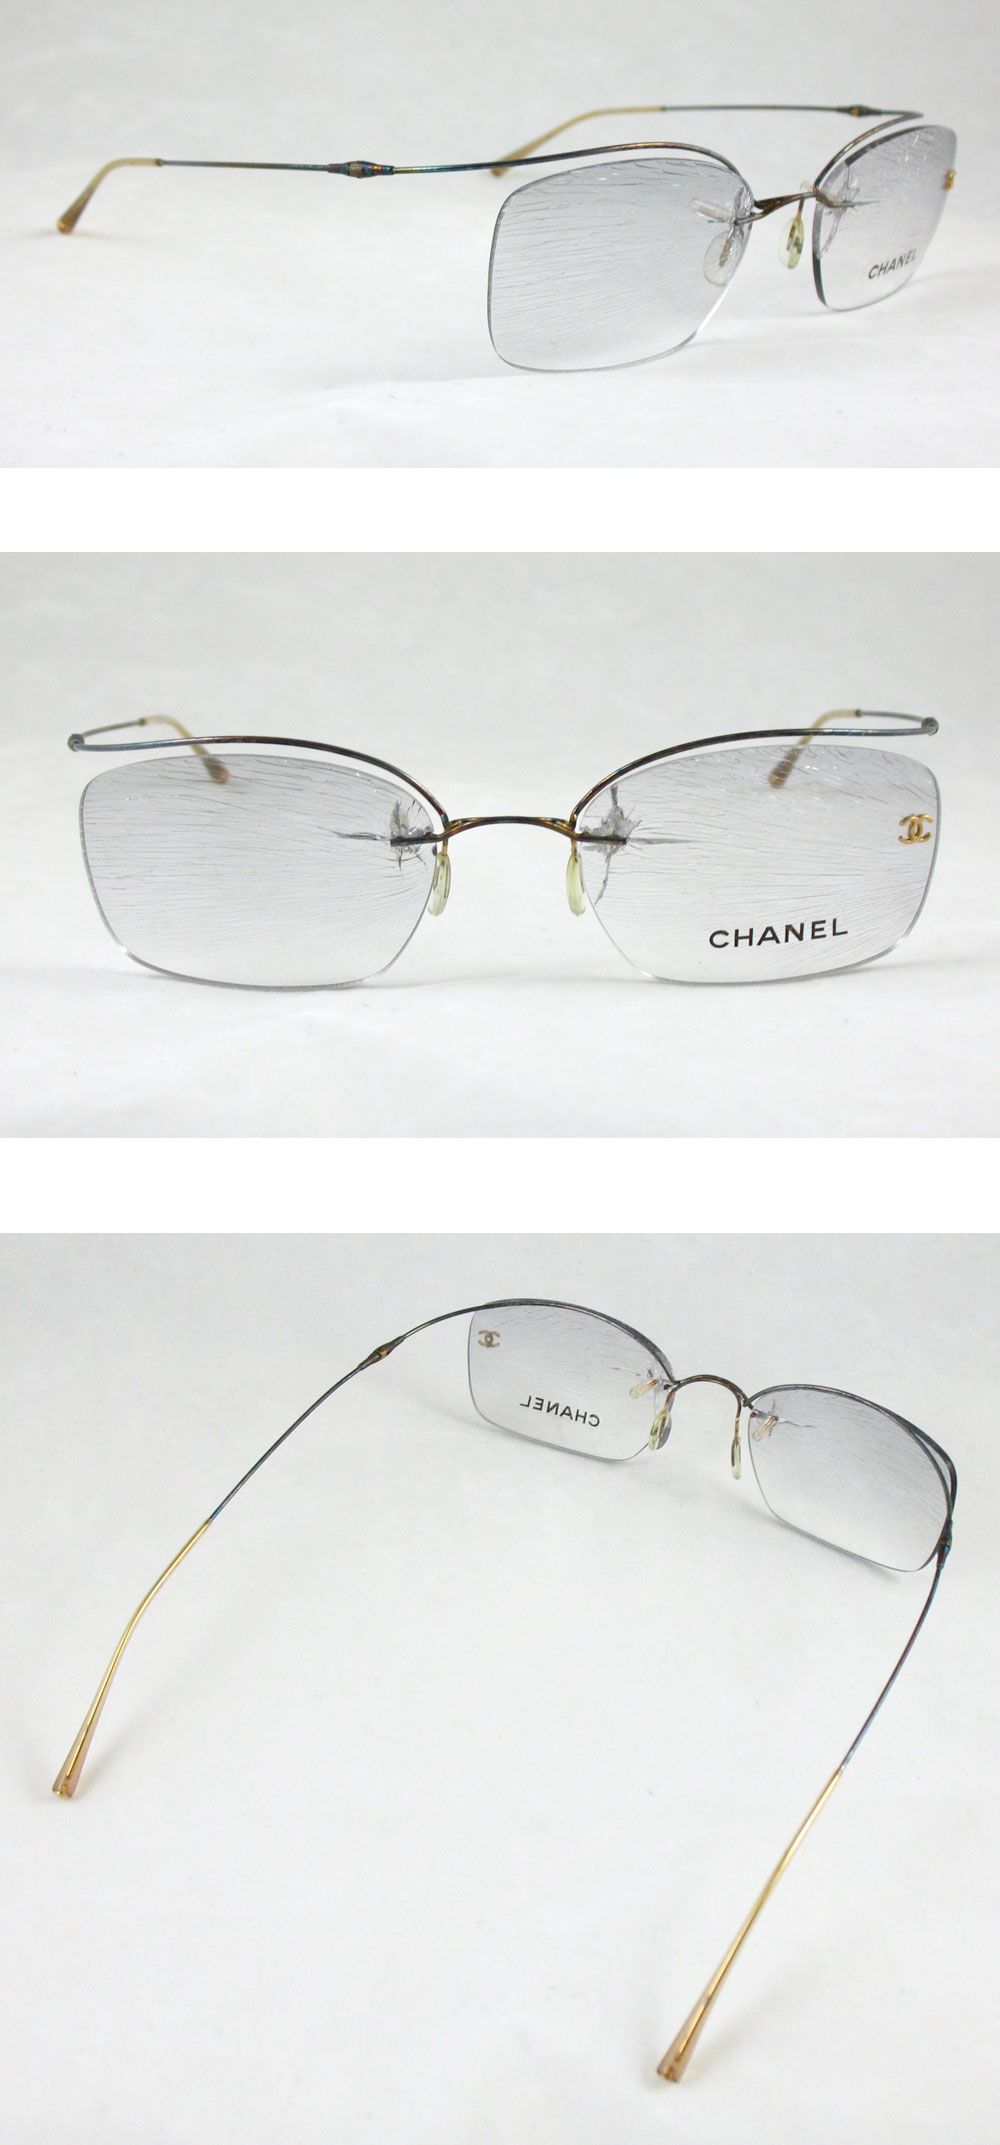 Authentic Chanel 2036 Eyeglasses Frame Made in Italy Broken Lense 50